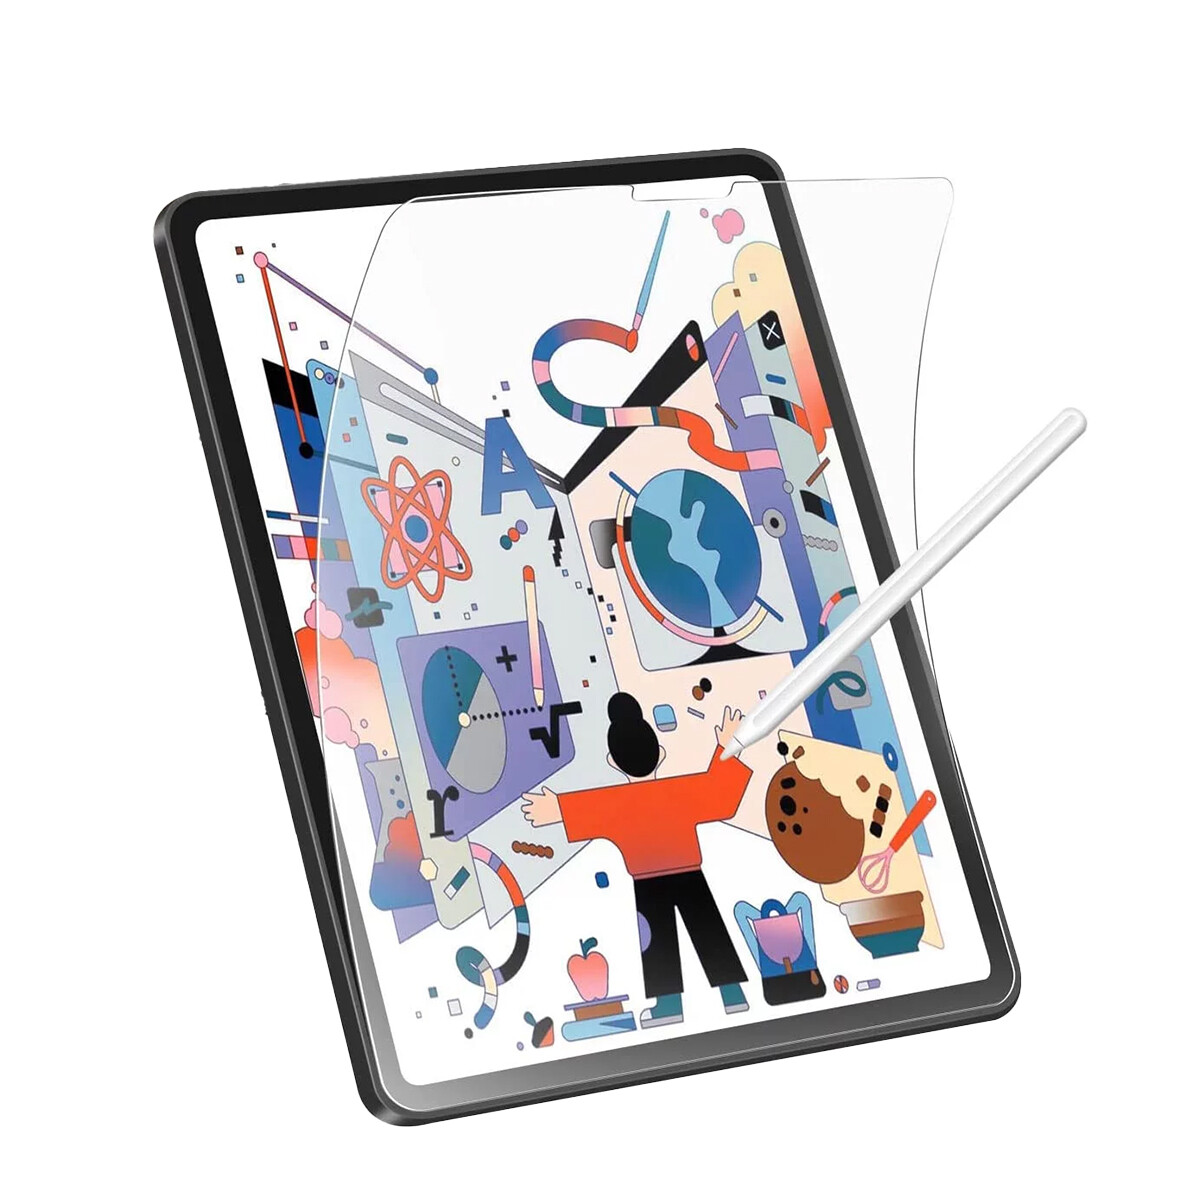 Protector de Pantalla Mate Textura Papel PaperFeel 12.9" para iPad Pro 5th / 6th Generation - Transparente 